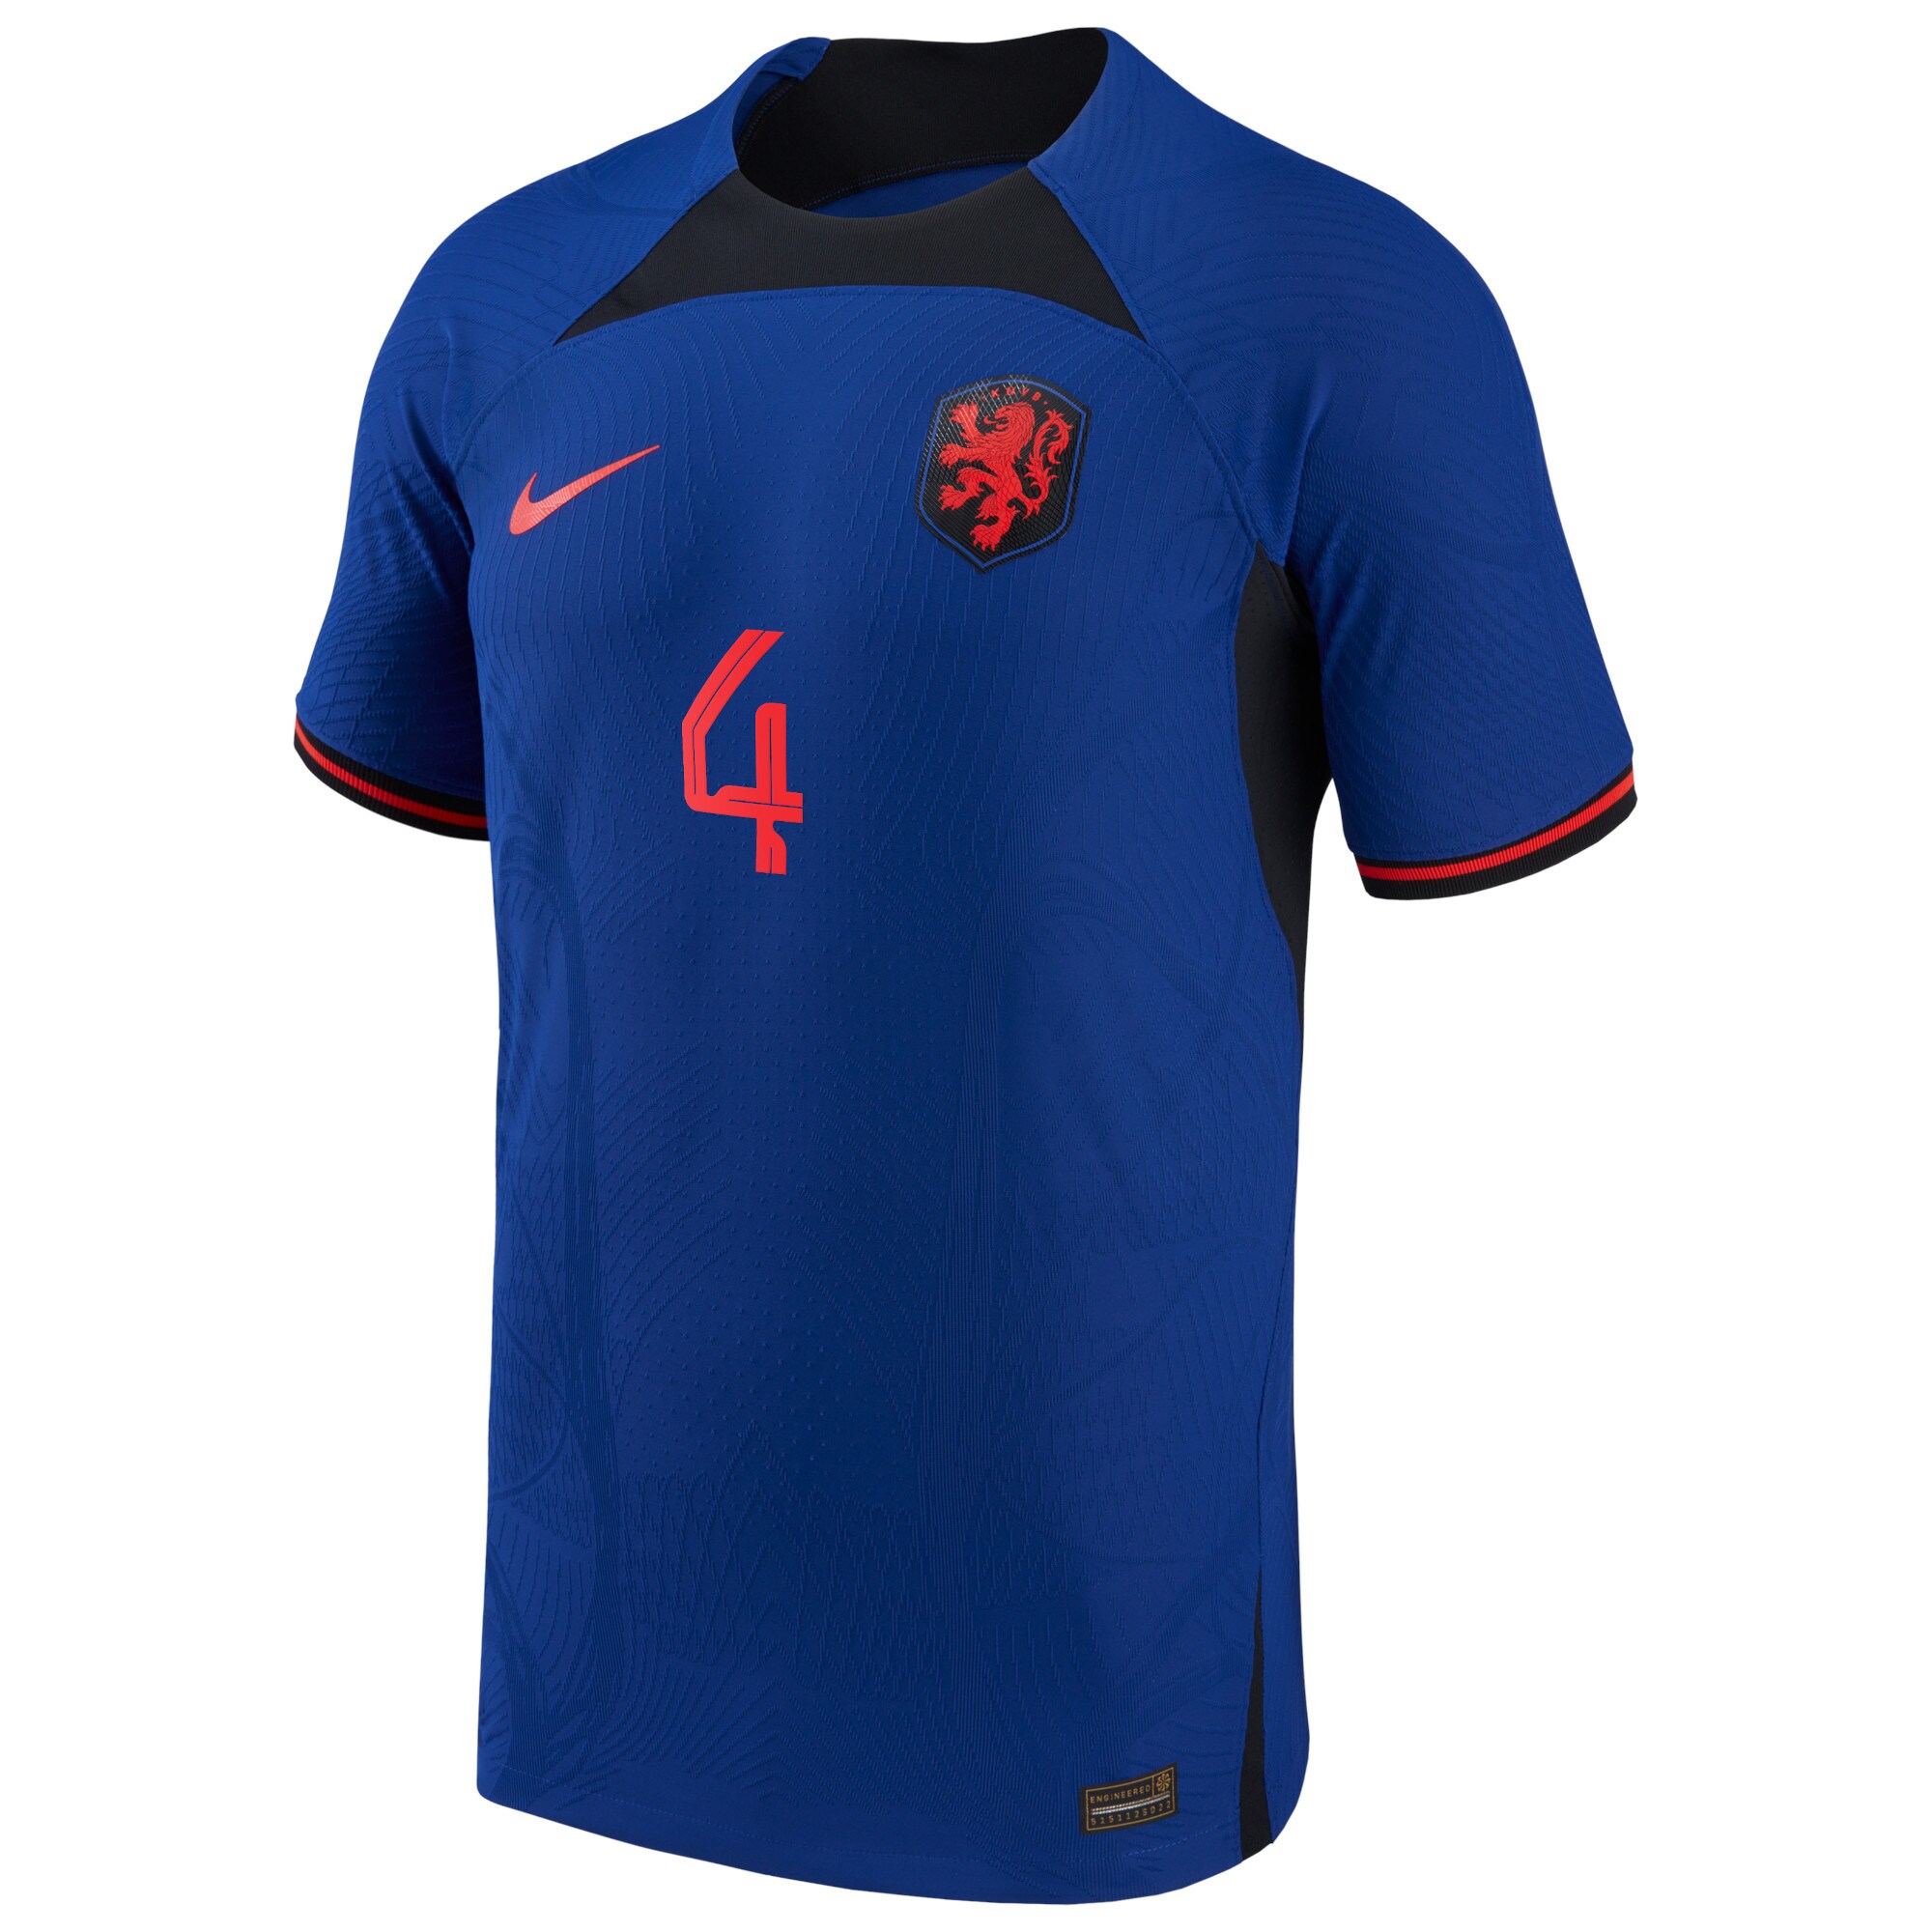 Netherlands Away Match Shirt 2022 with Virgil 4 printing